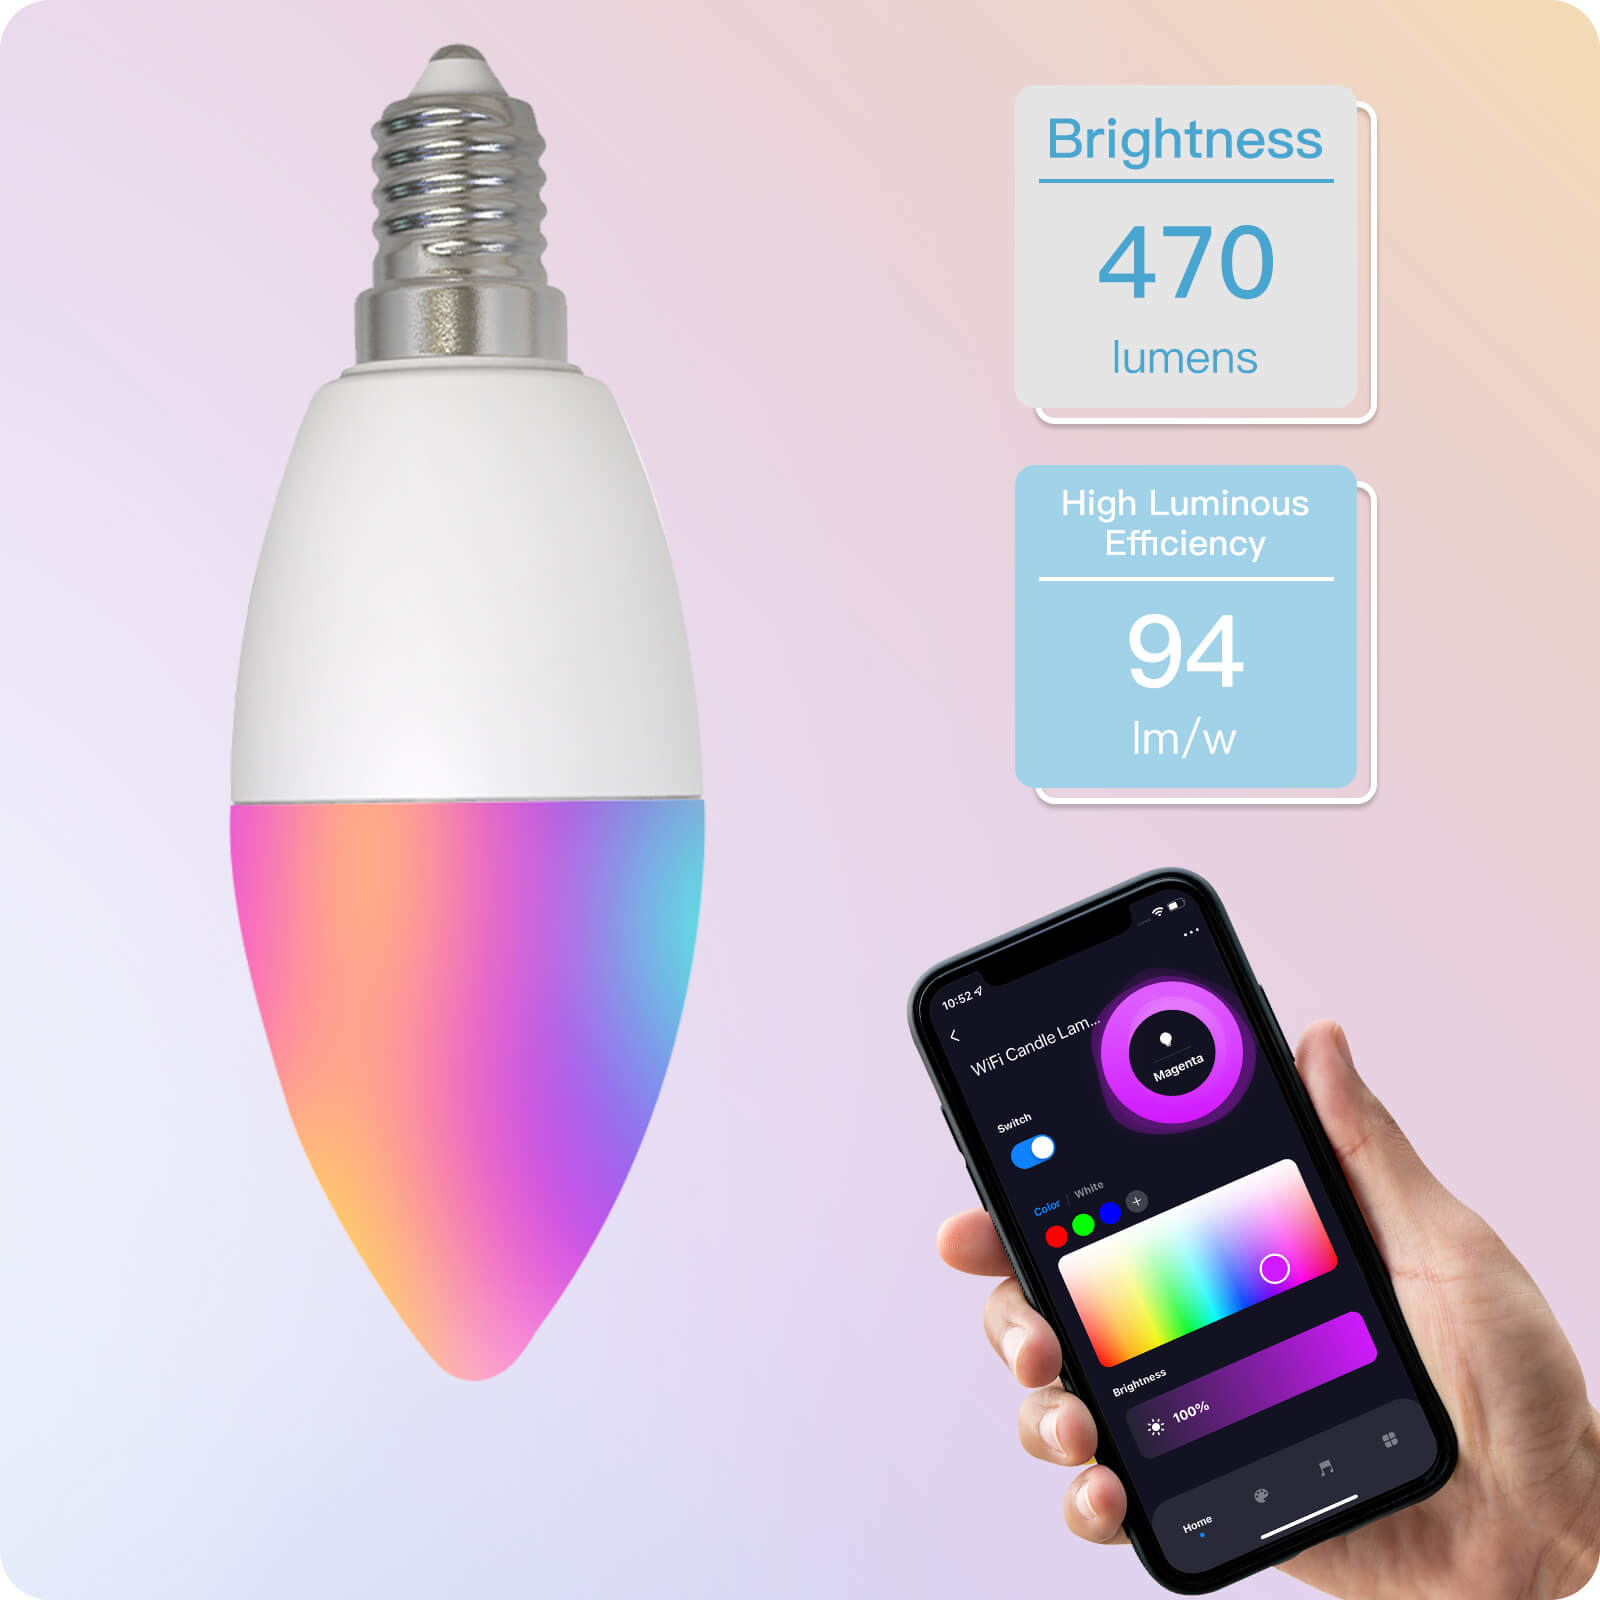 brightness 470 lumens | high luminous effciency 94 Im/W - MOES